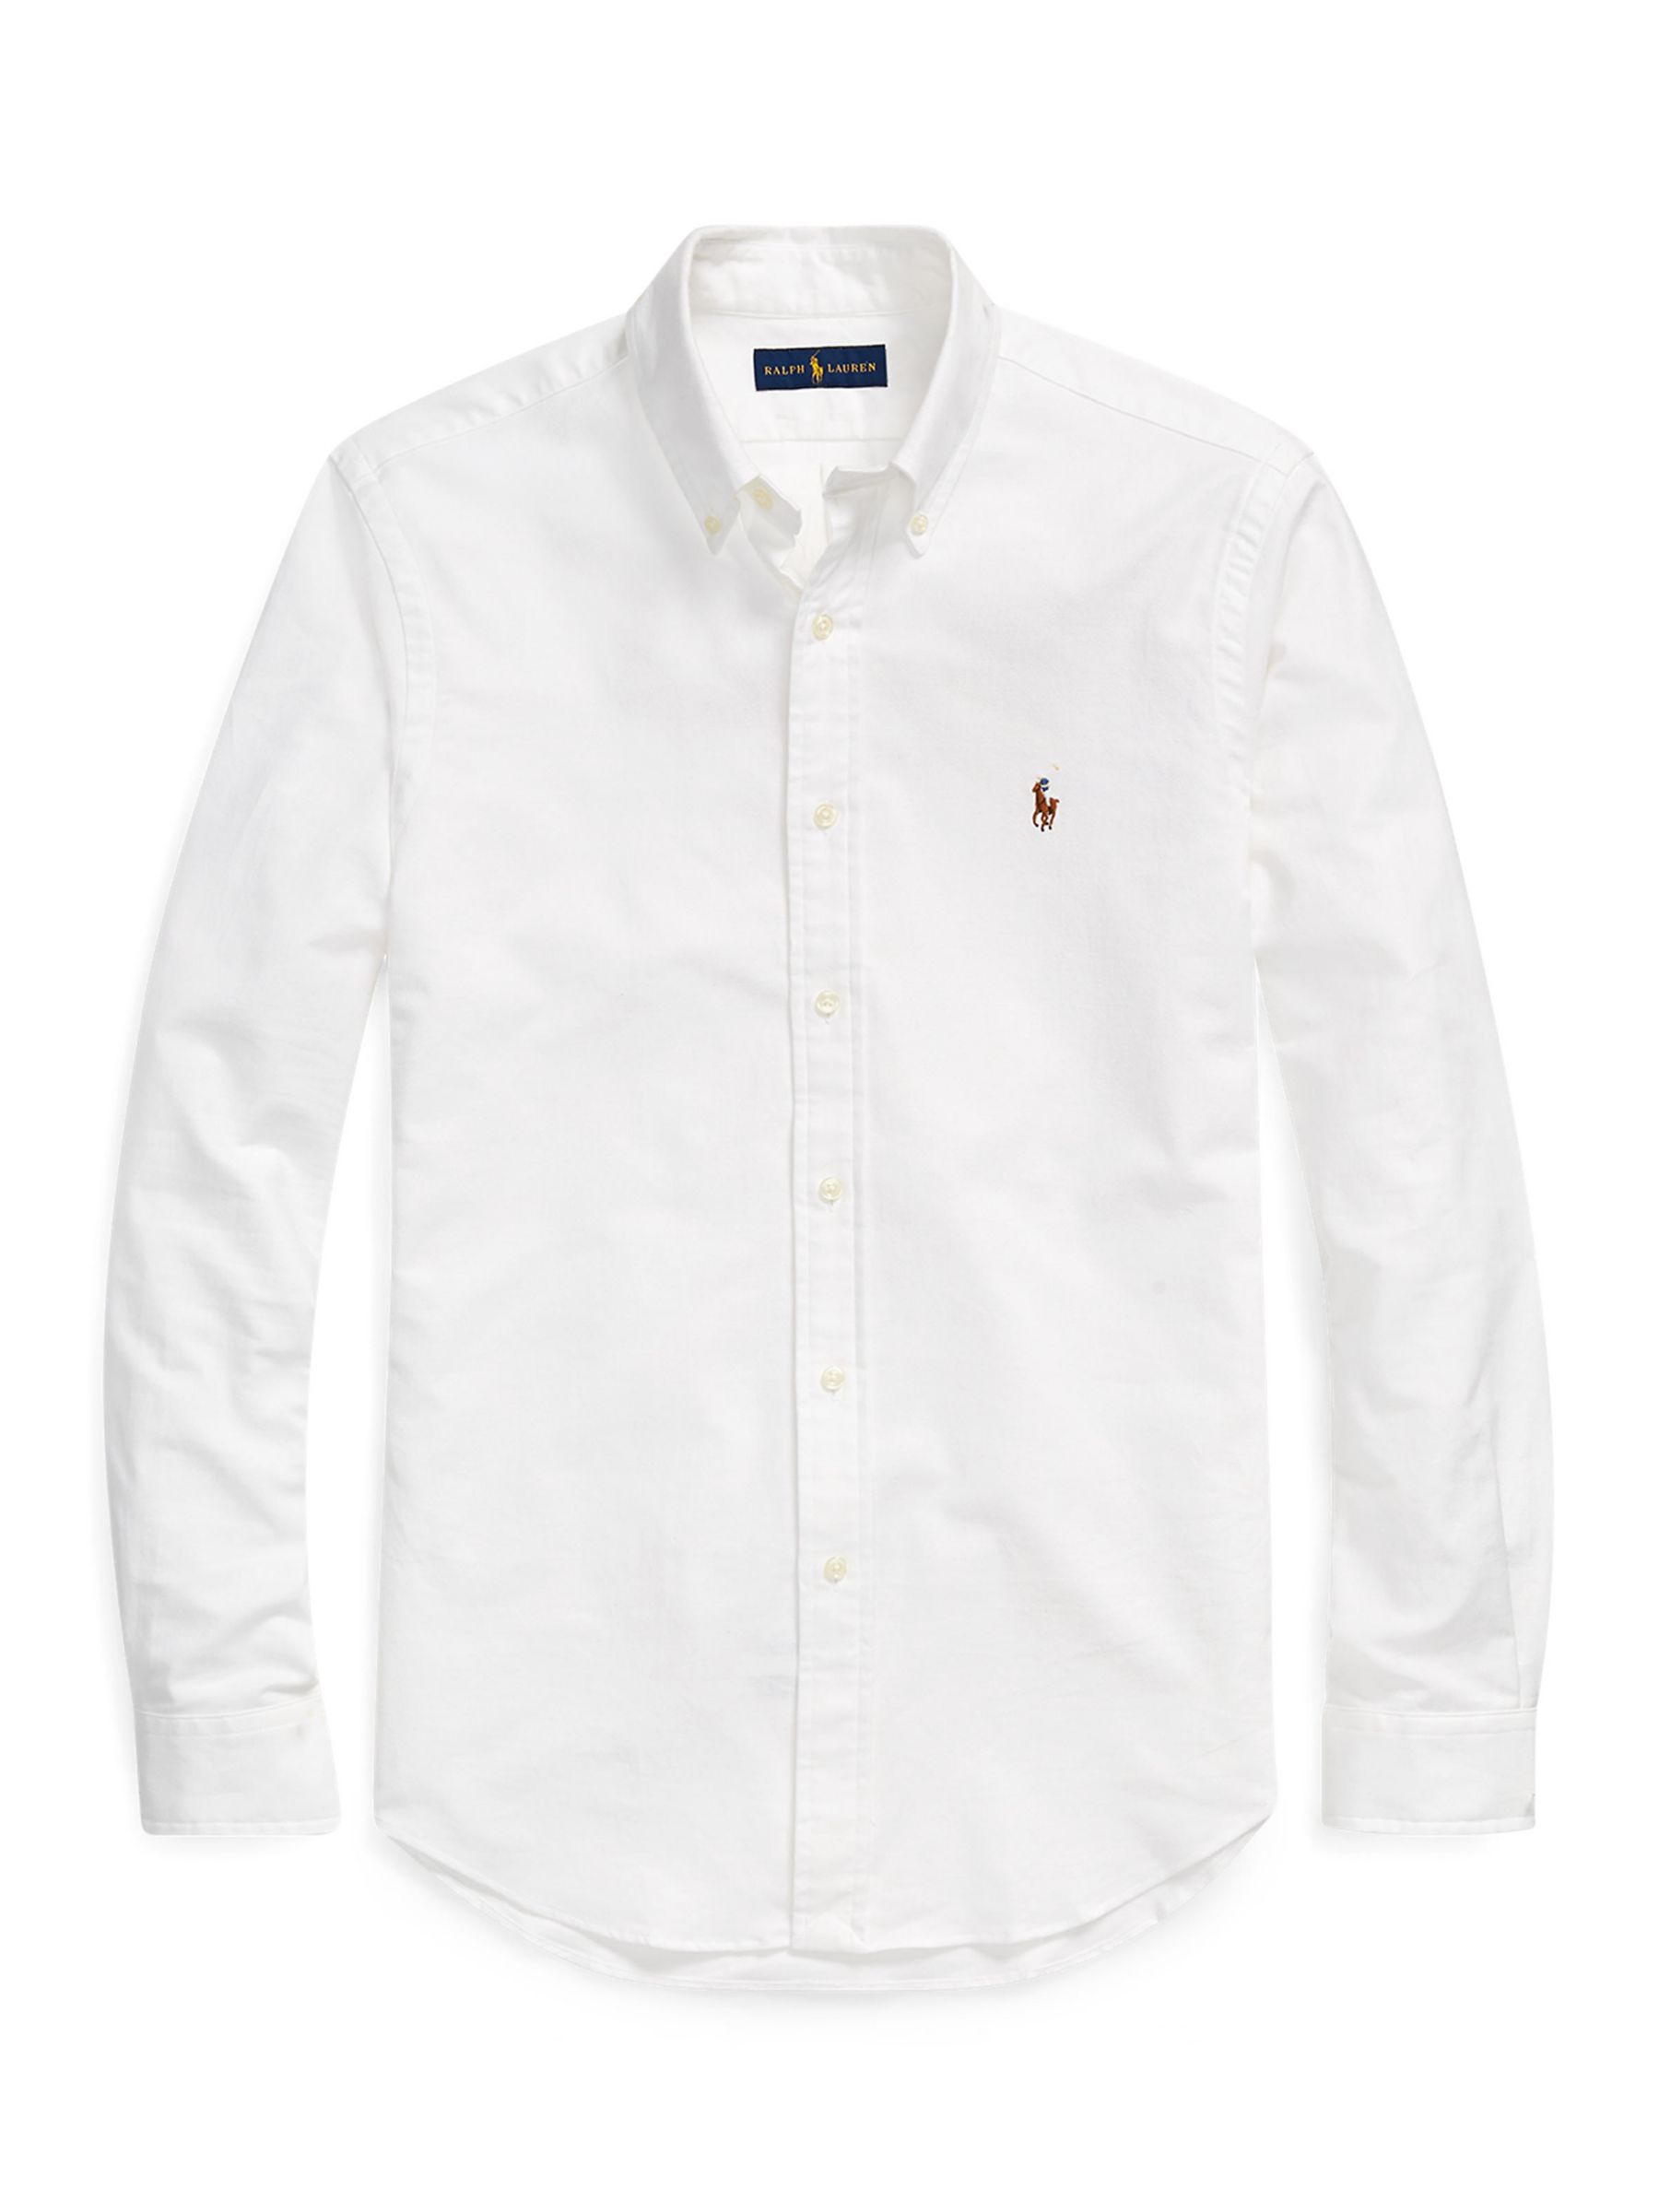 Polo Ralph Lauren Slim Fit Oxford Shirt, White at John Lewis